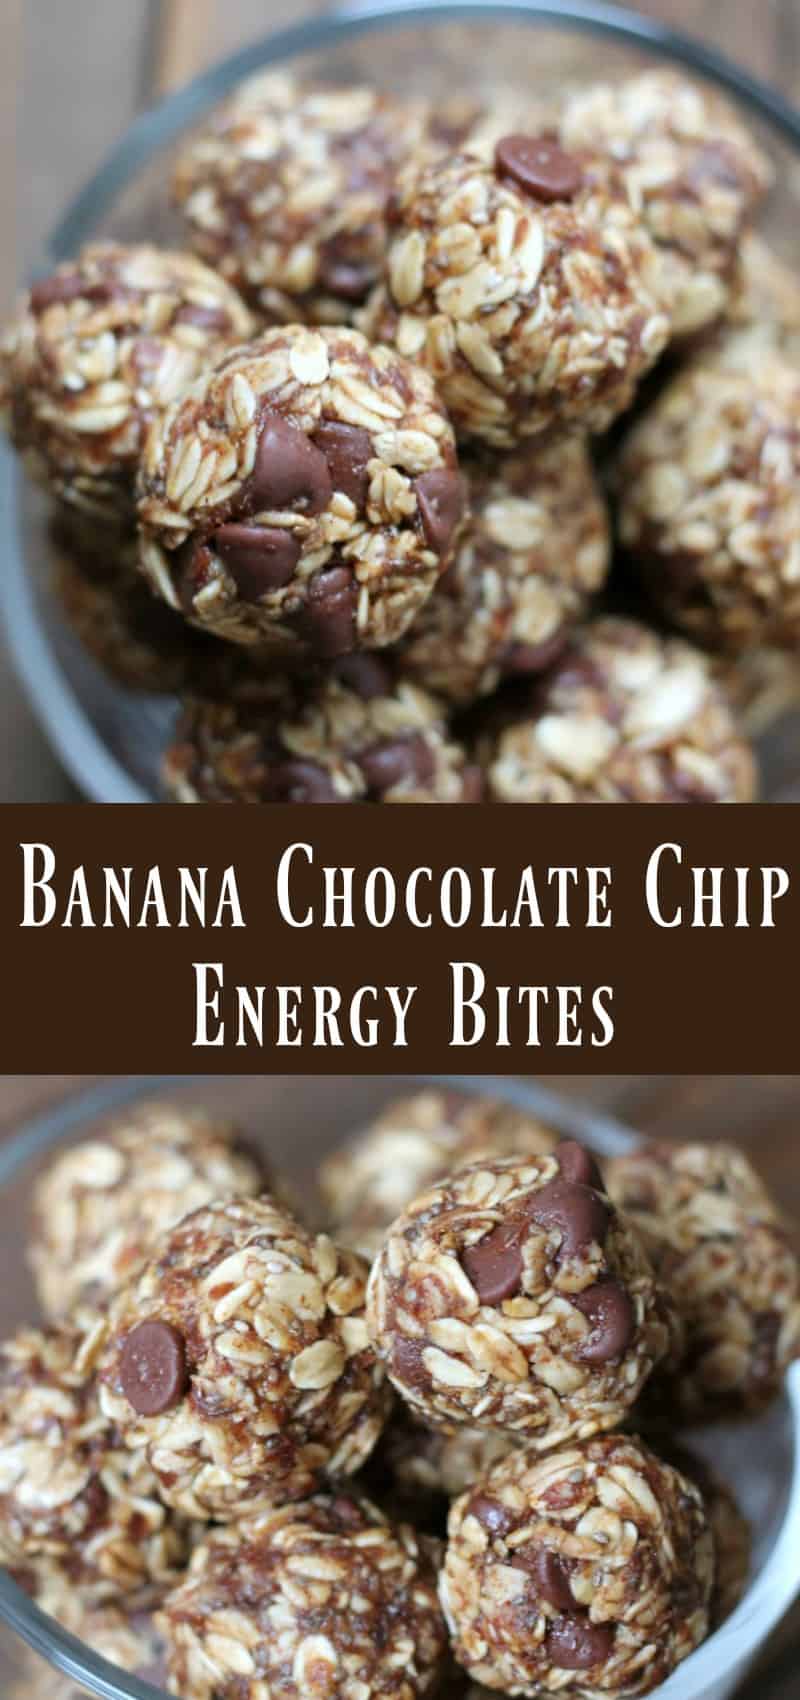 Banana Chocolate Chip Energy Bites